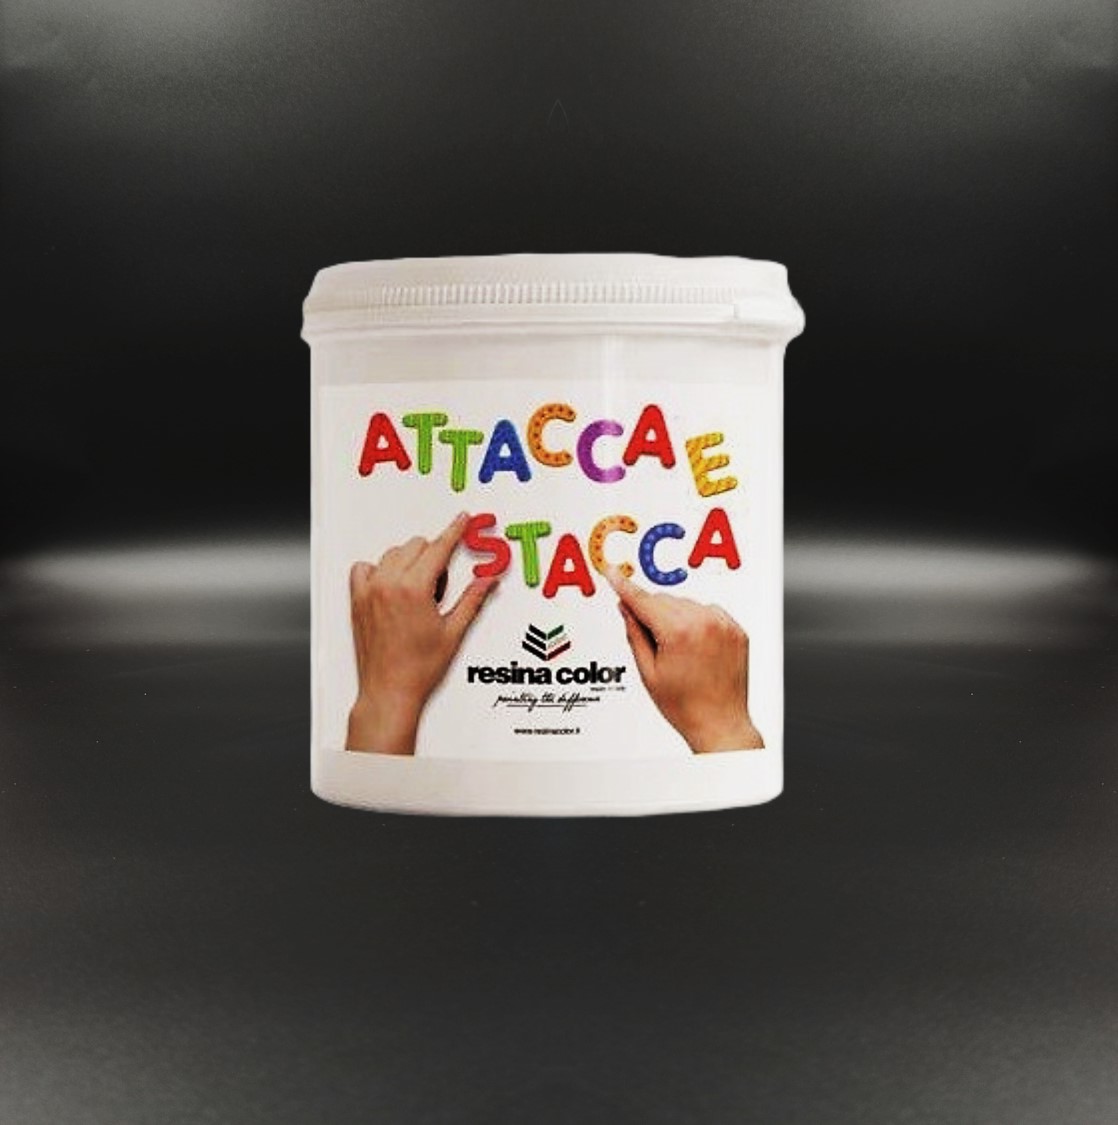 ATTACCA E STACCA – Resina Color